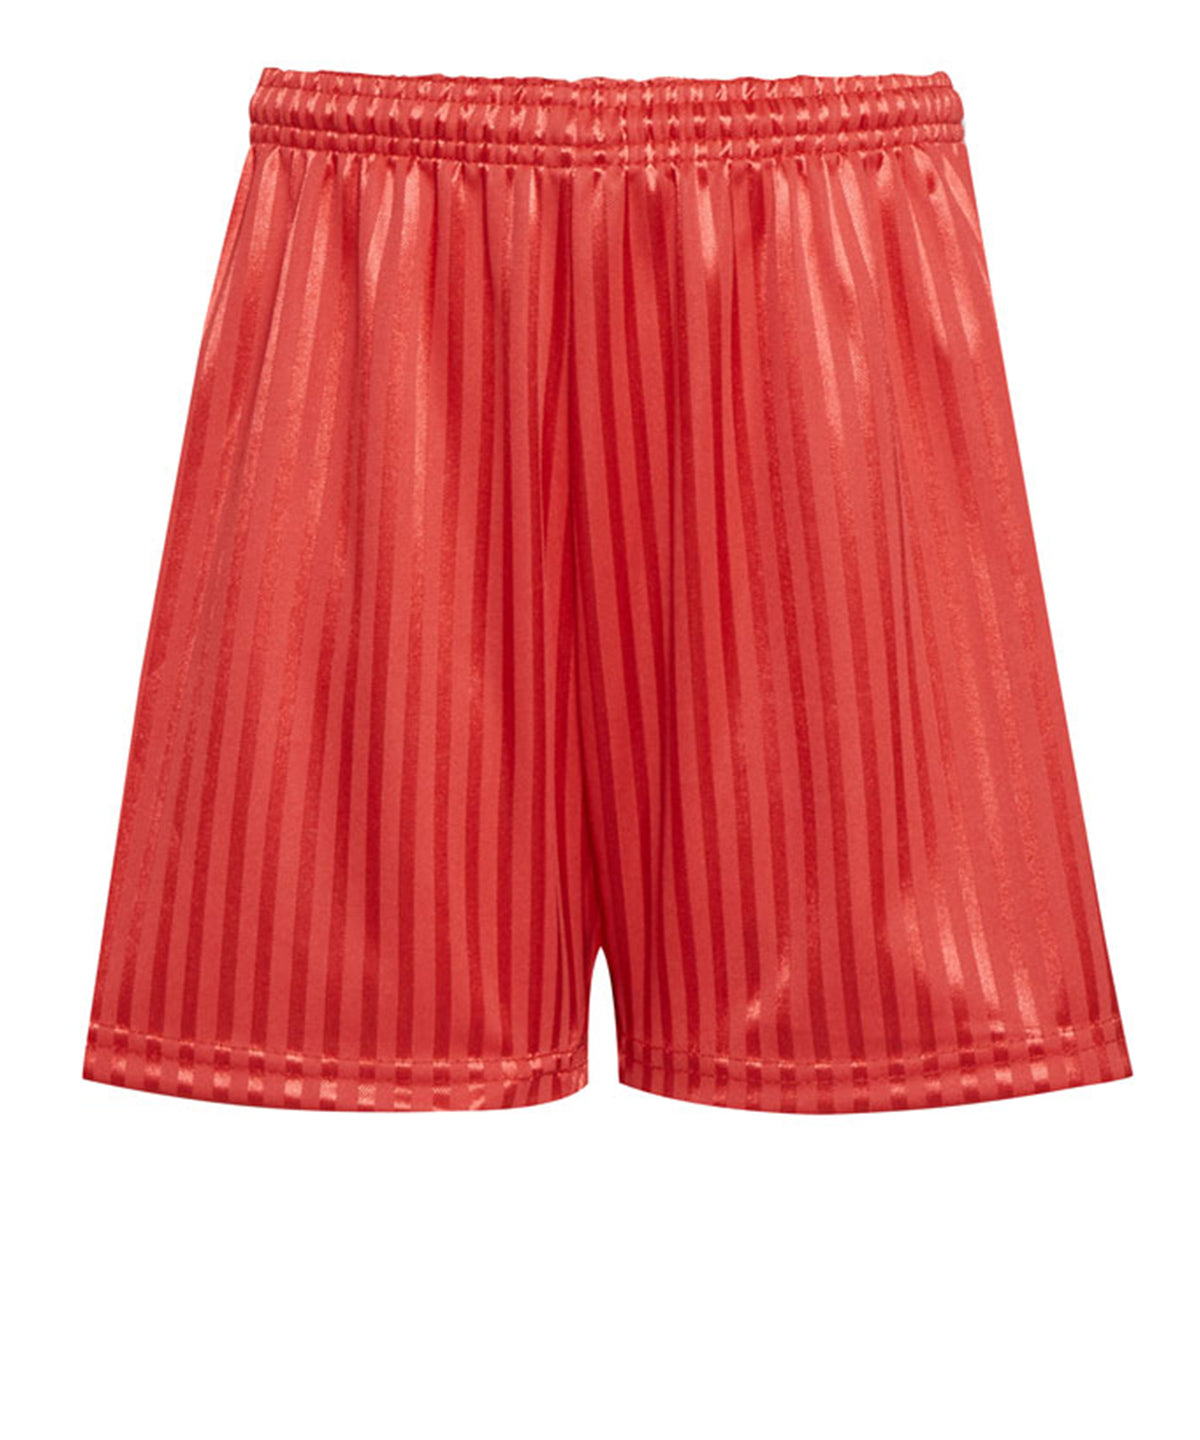 Red - Sports Shorts - Shadow Stripe